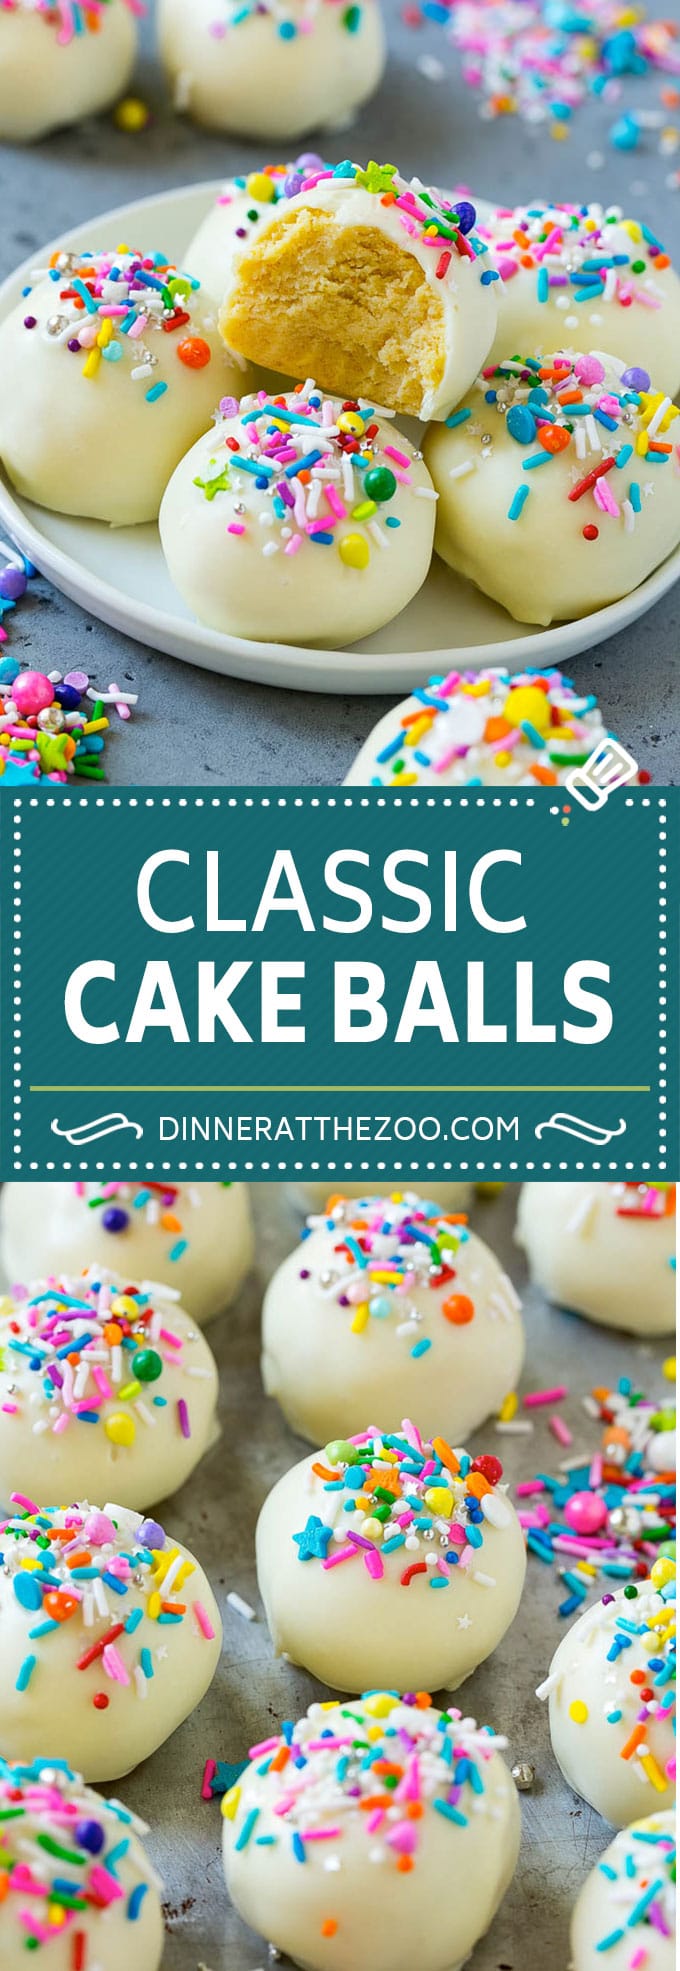 Cake Balls Recipe | Cake Truffles | Cake Bites #cake #dessert #sweets #dinneratthezoo